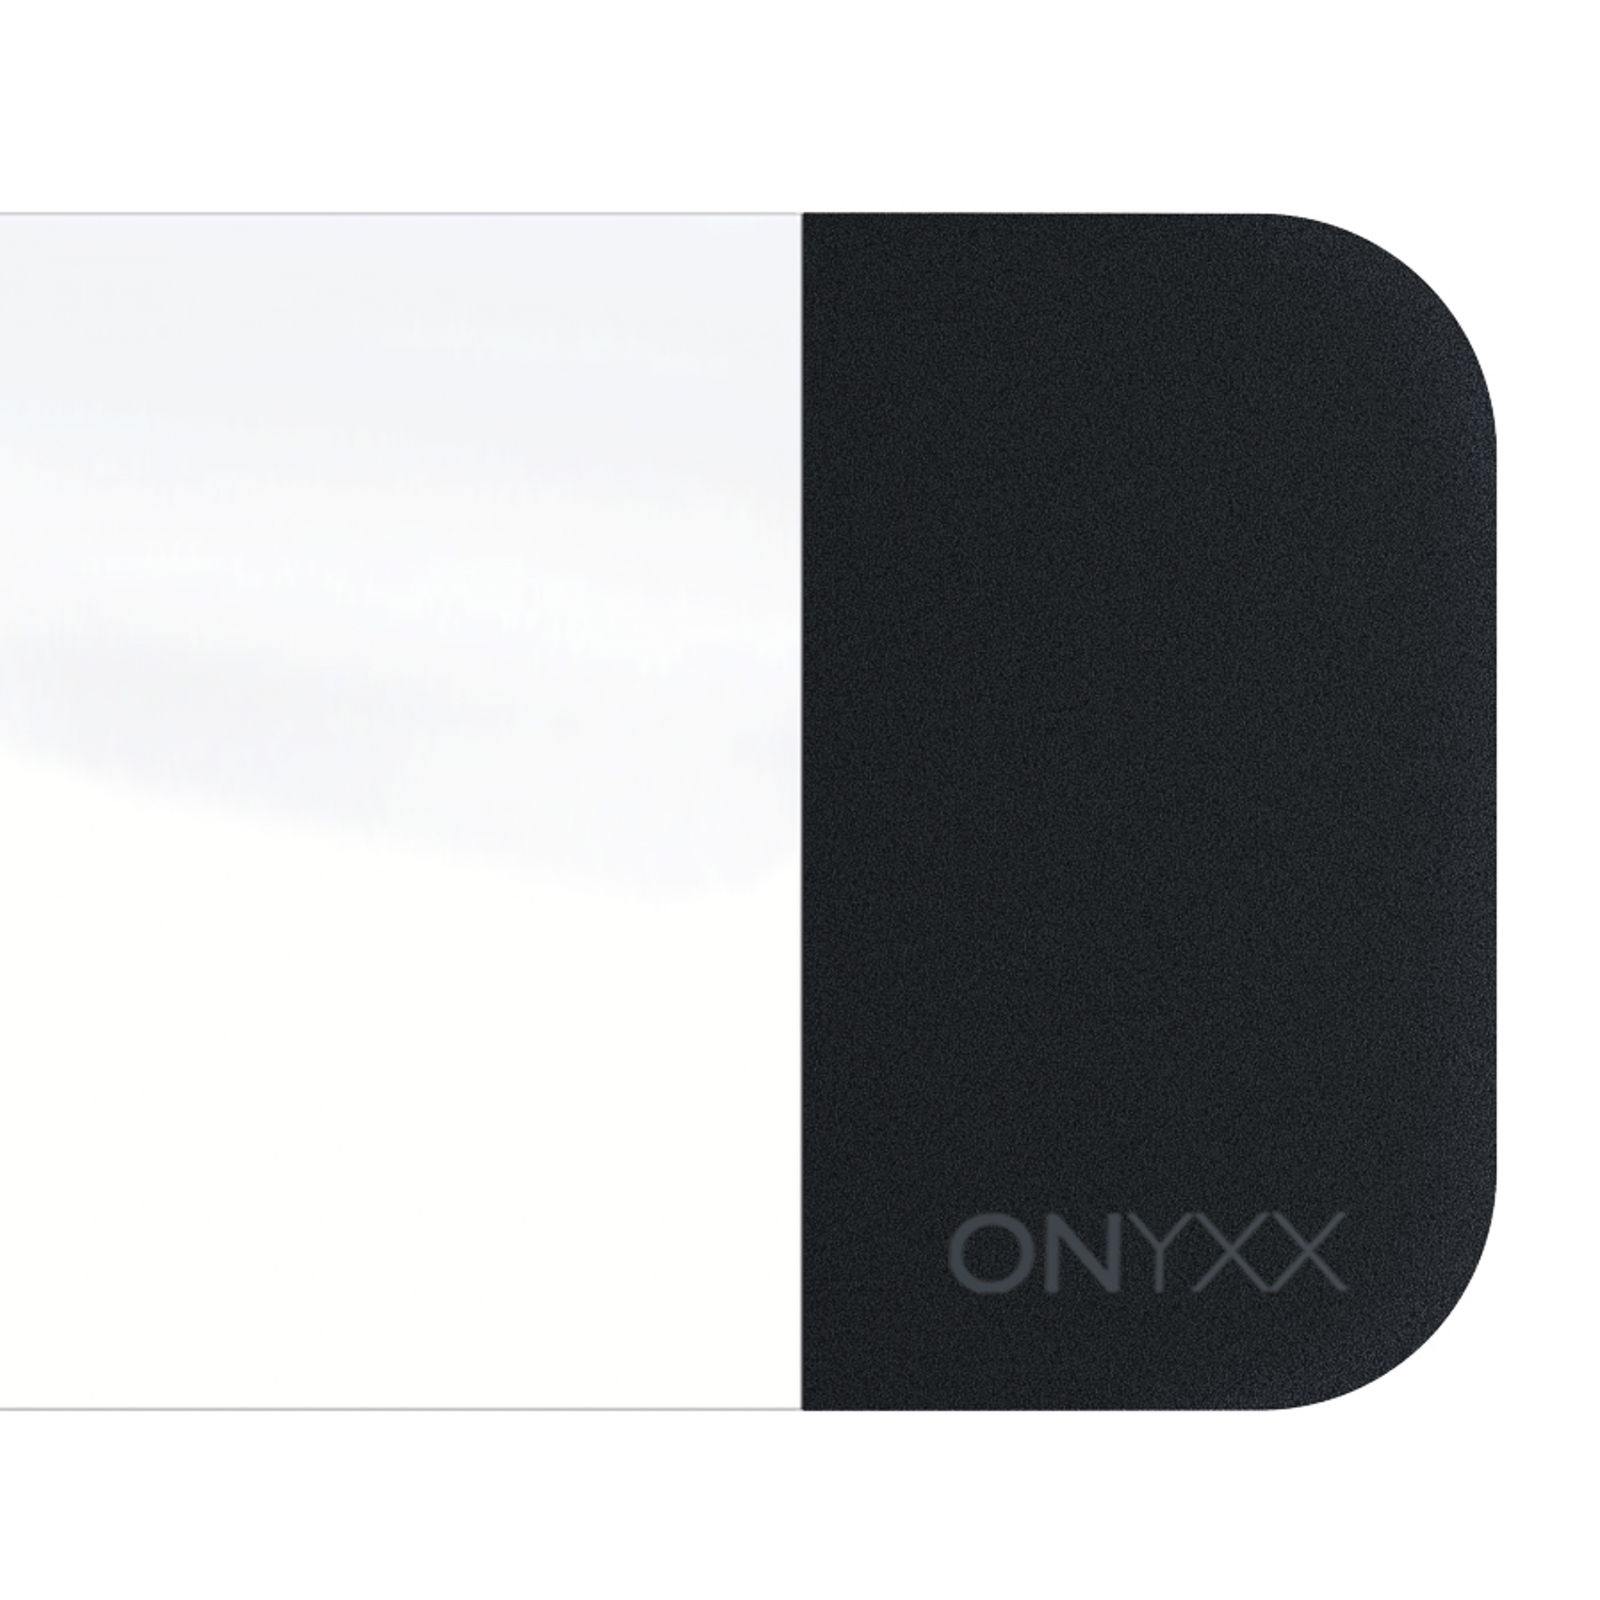 GRIMMEISEN "Onyxx Linea Pro" pakabukas baltos/juodos spalvos